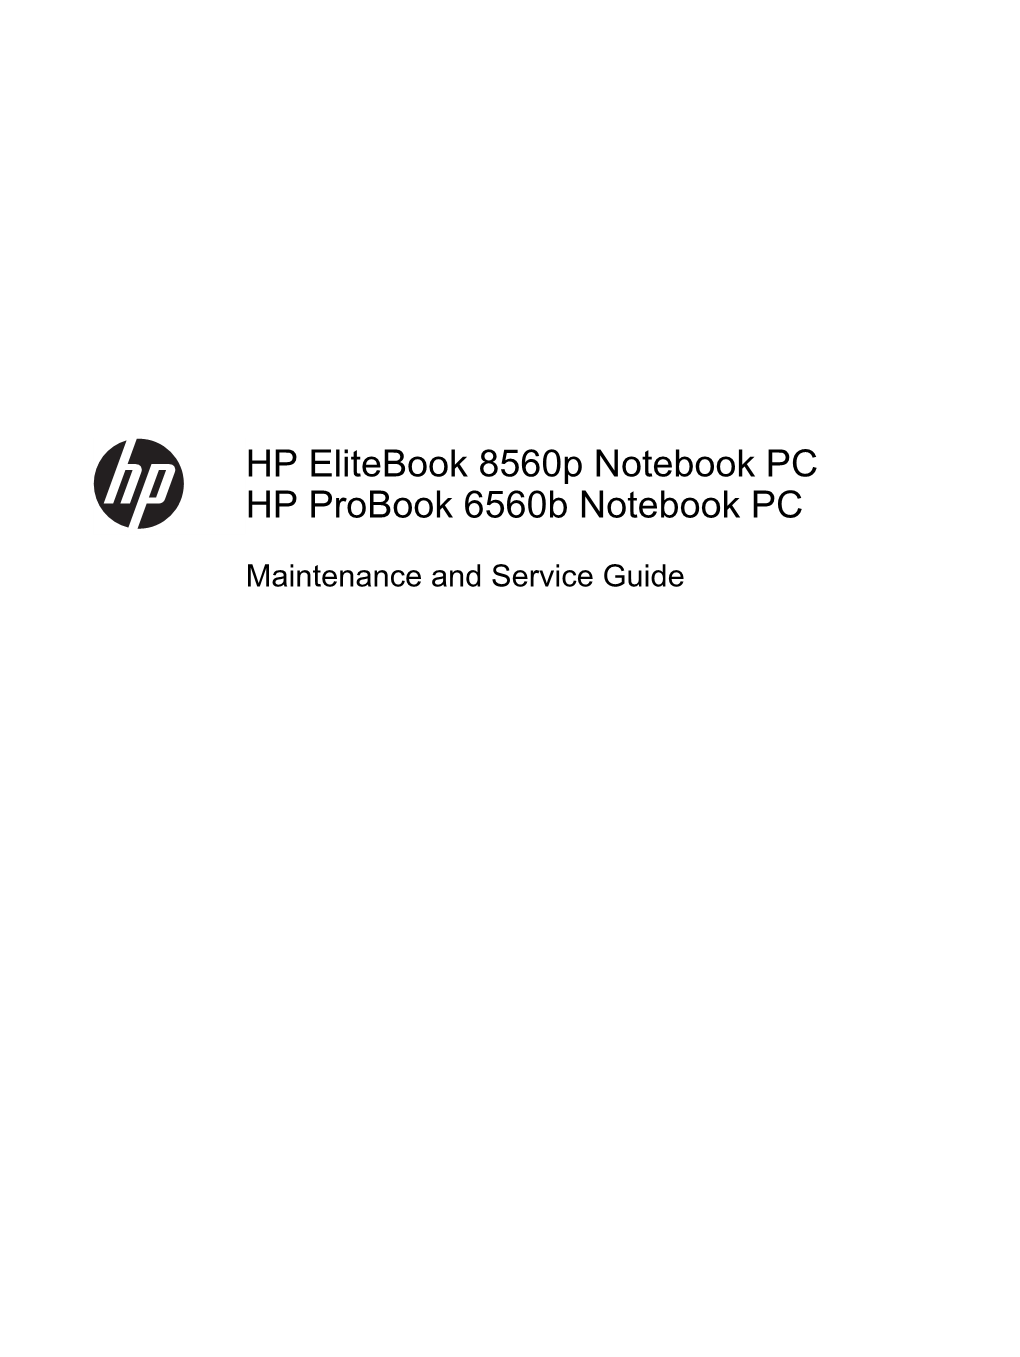 HP Elitebook 8560P Notebook PC HP Probook 6560B Notebook PC